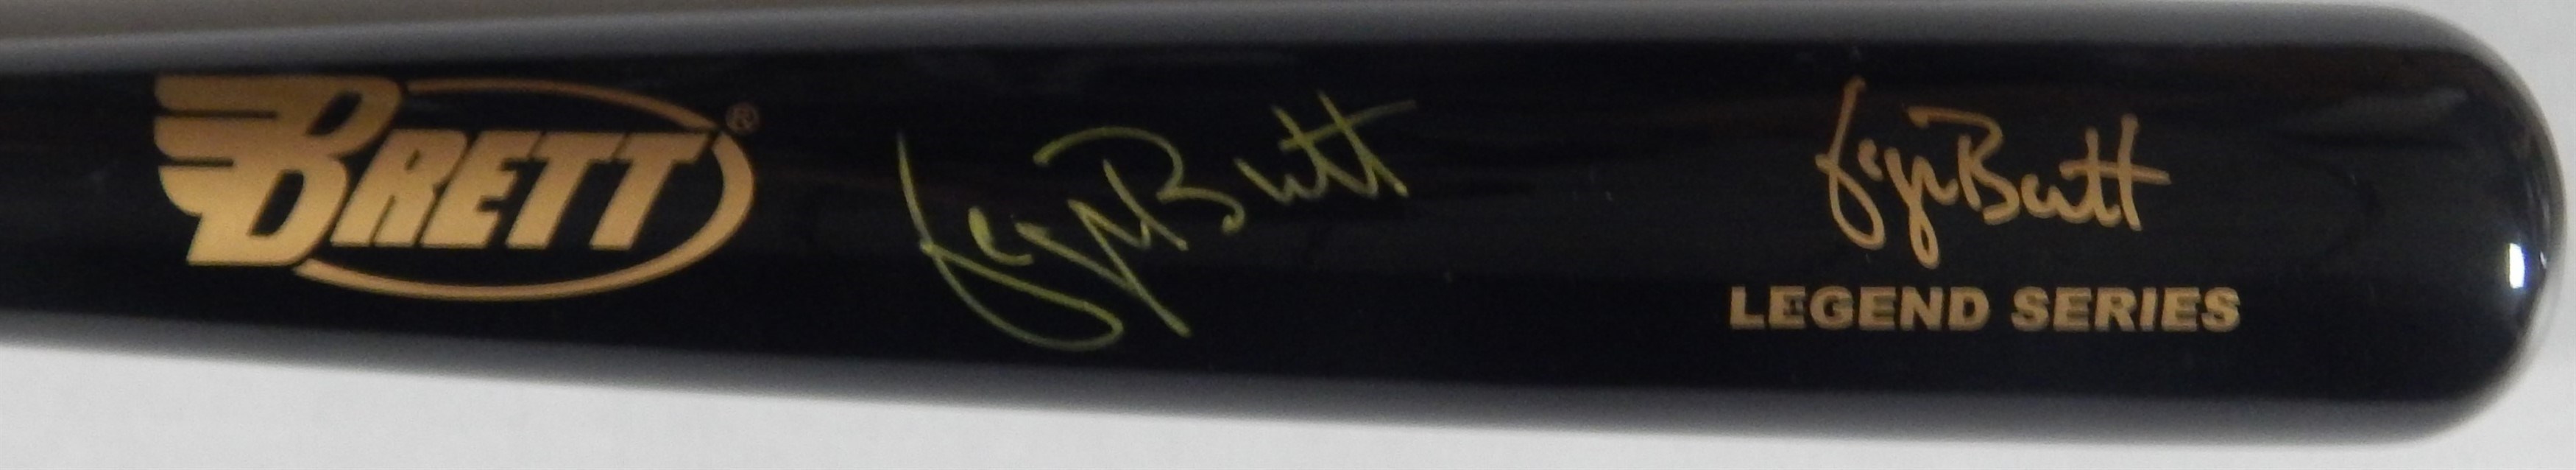 Baseball Autographs - George Brett Signed Bat